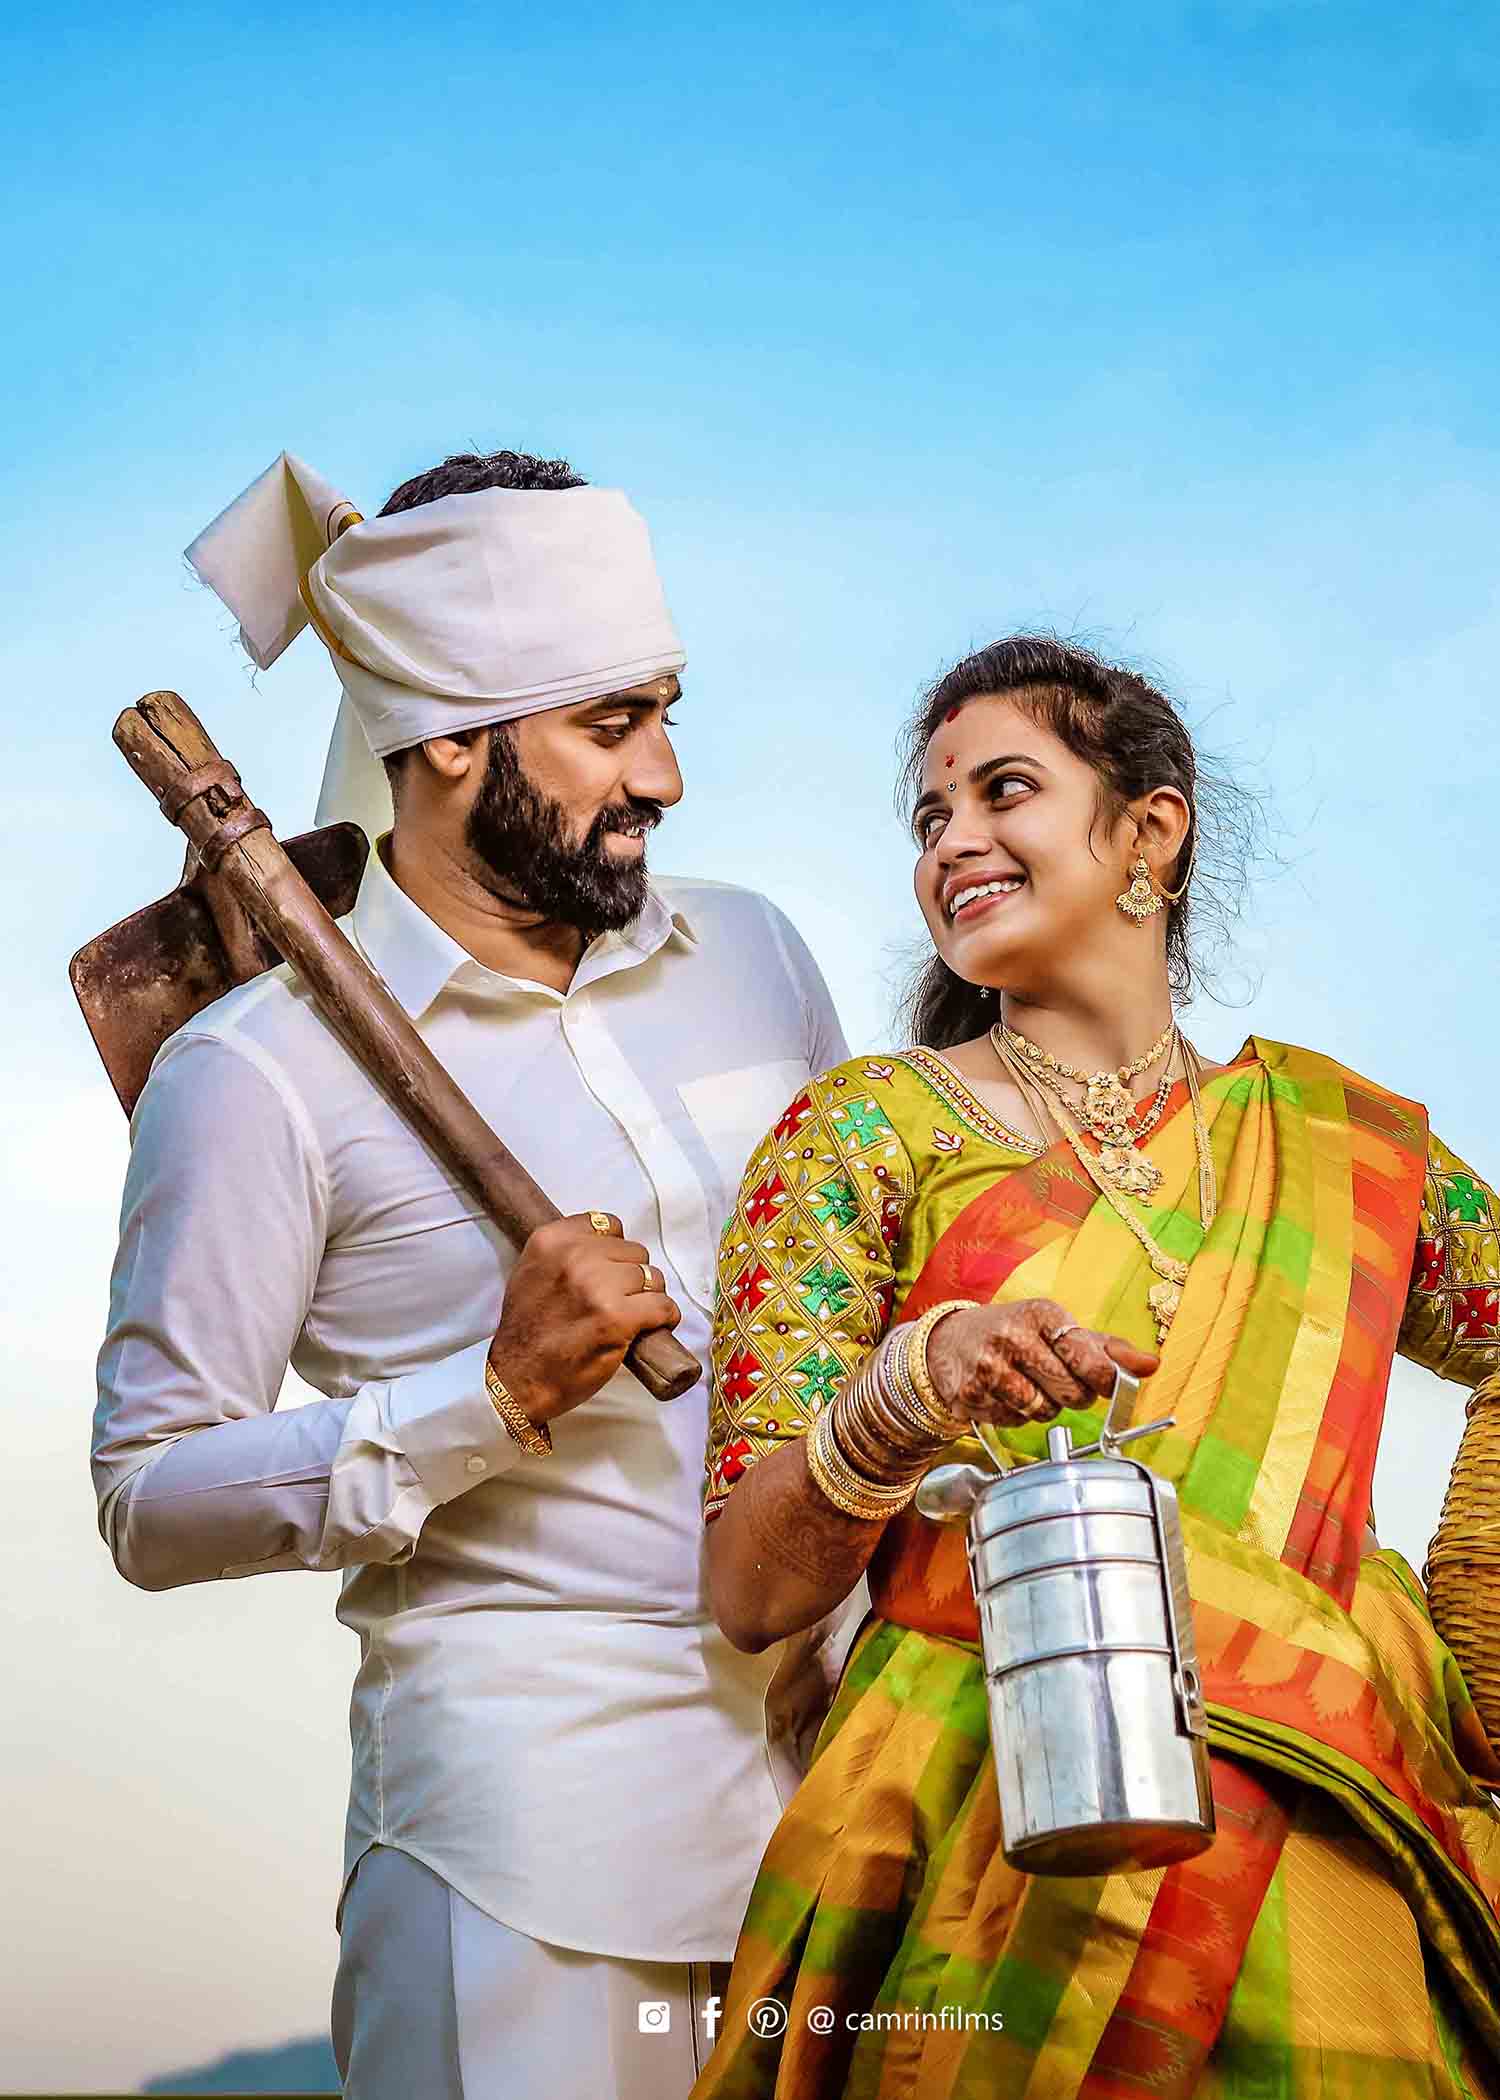 Ruturaj and Utkarsha in traditional Tamil wedding attire : r/csk